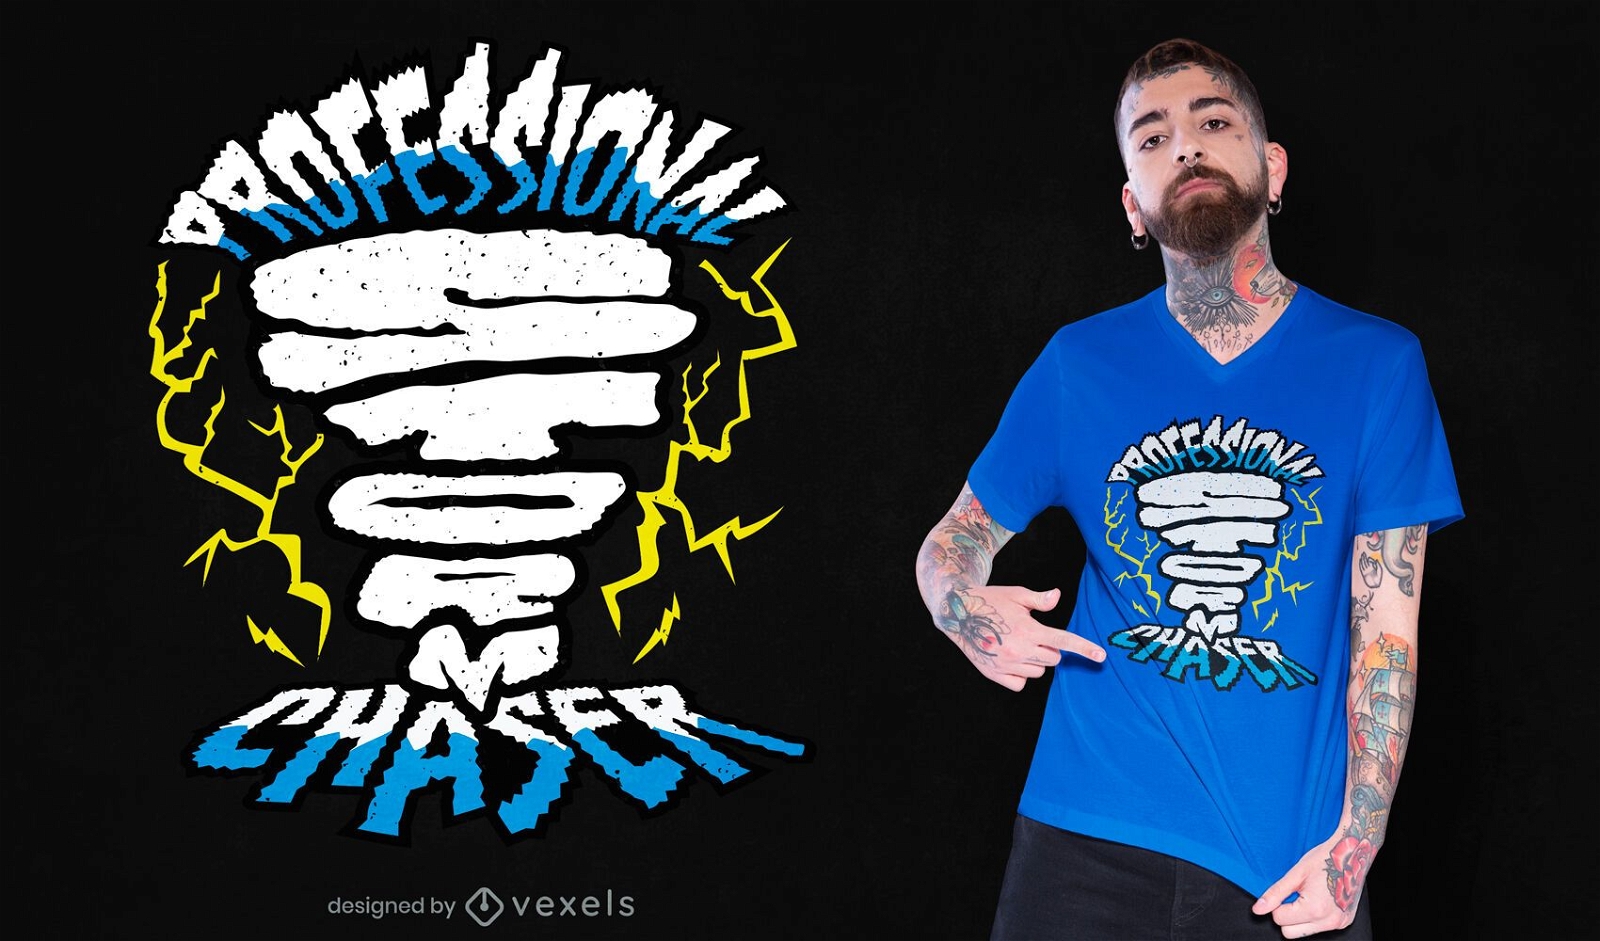 Professional storm chaser t-shirt design